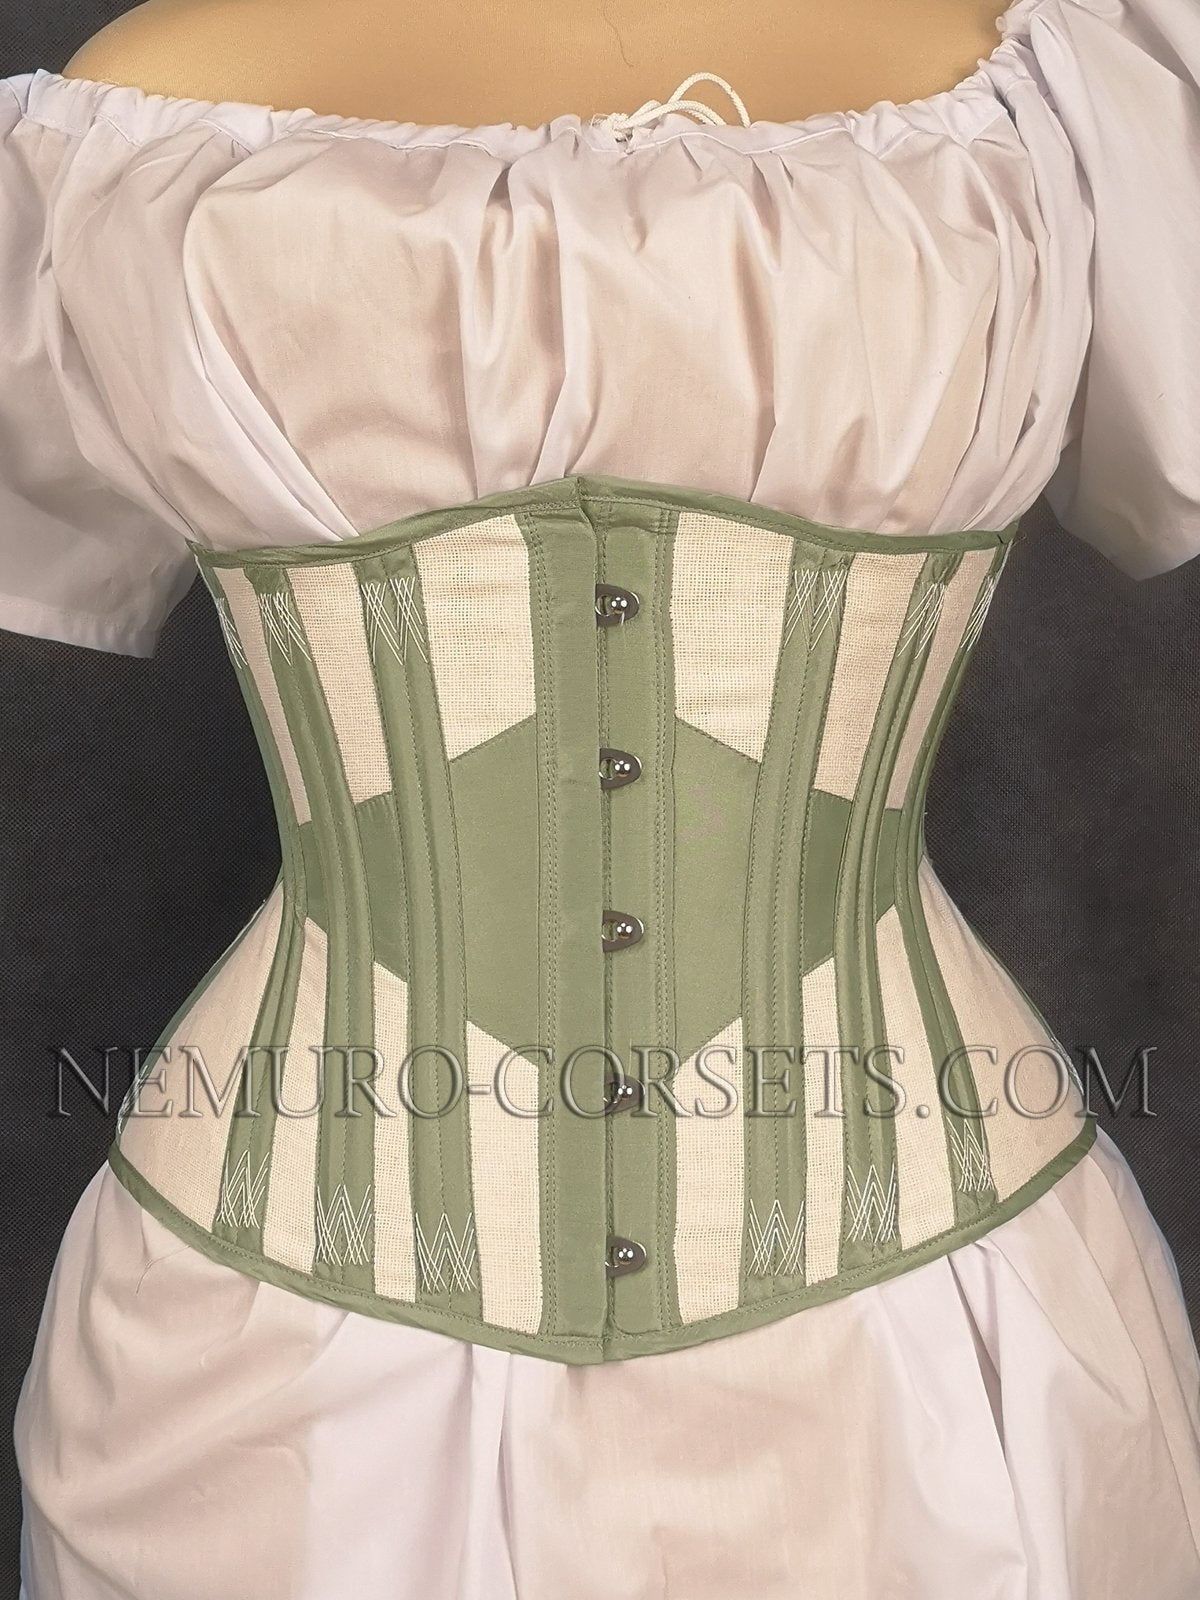 Ventilated underbust corset 1900s - Custom order Nemuro-Corsets